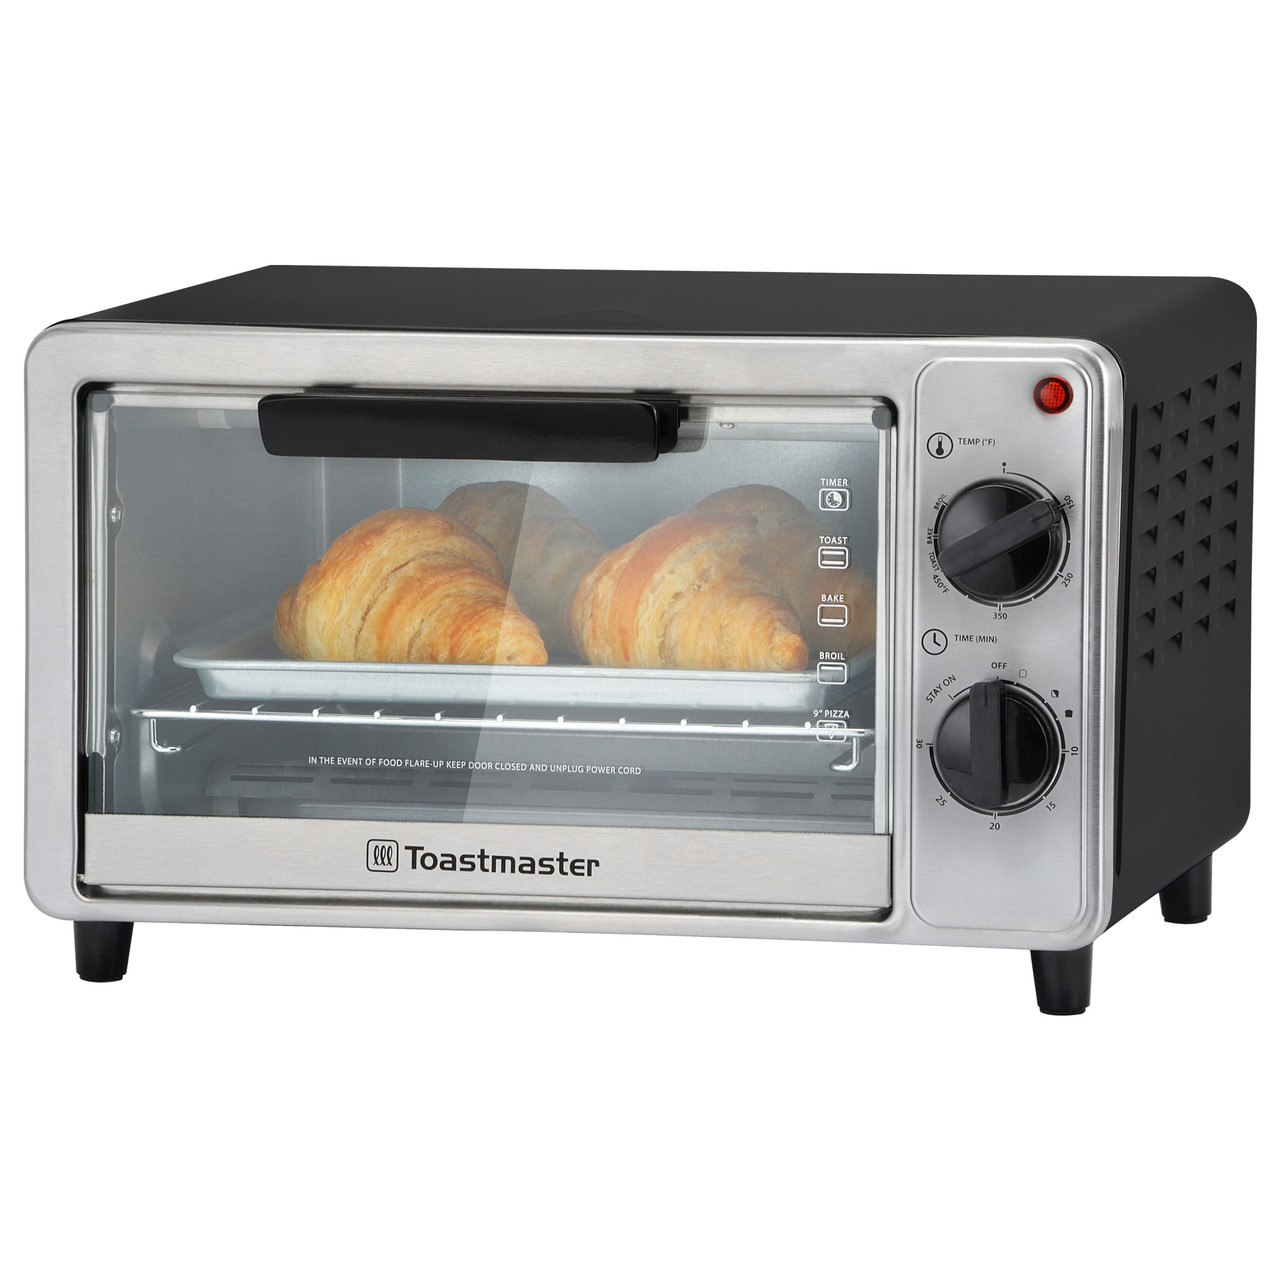 Toasters + Ovens, Coffee + Tea, Blenders + Food Prep